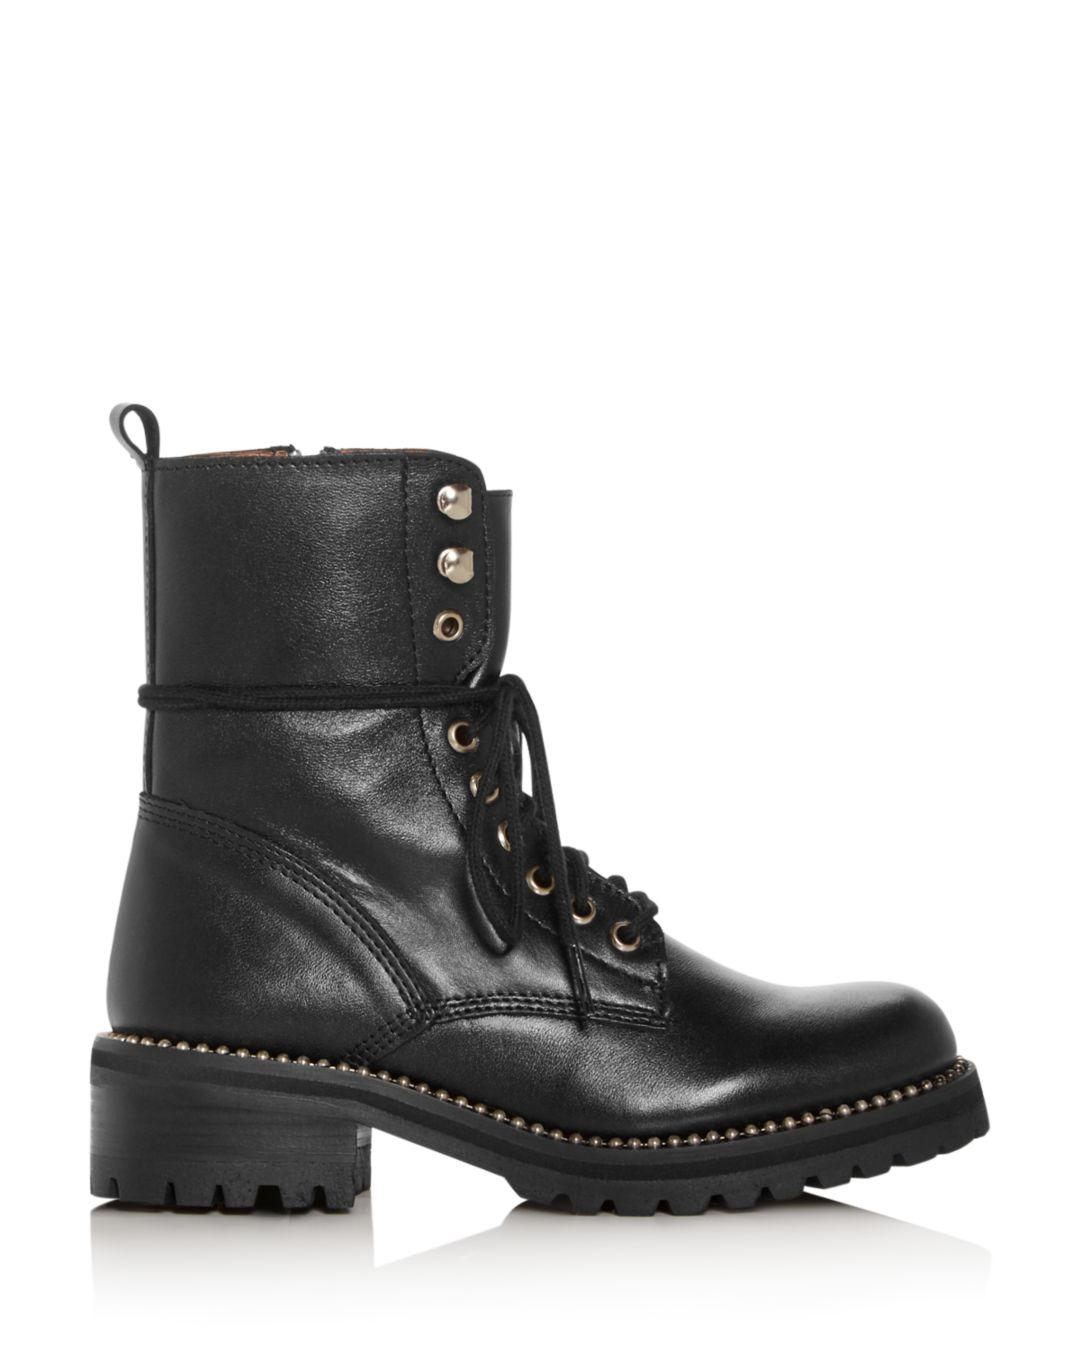 Aqua Leather Women's Jax Combat Boots in Black - Lyst